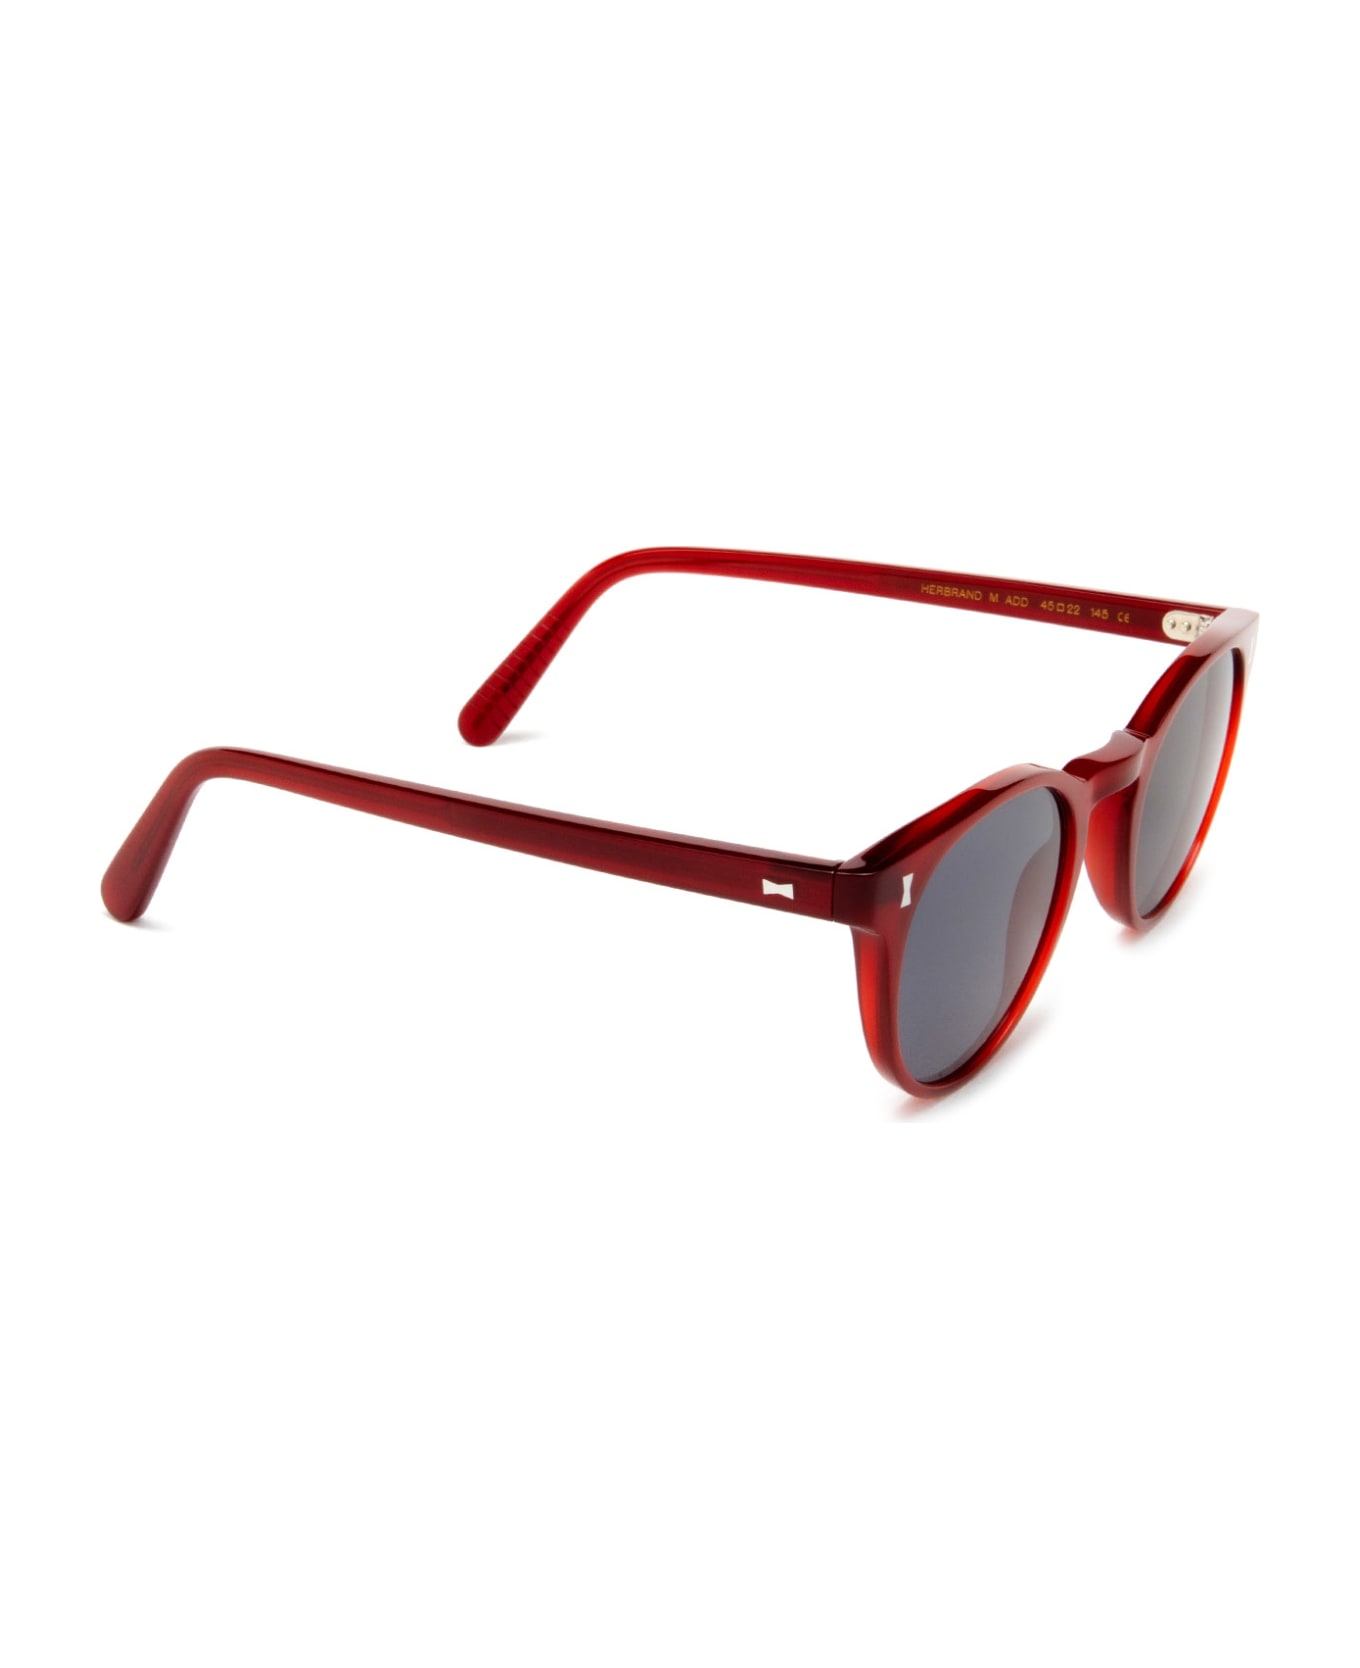 Cubitts Herbrand Sun Madder Sunglasses - Madder サングラス